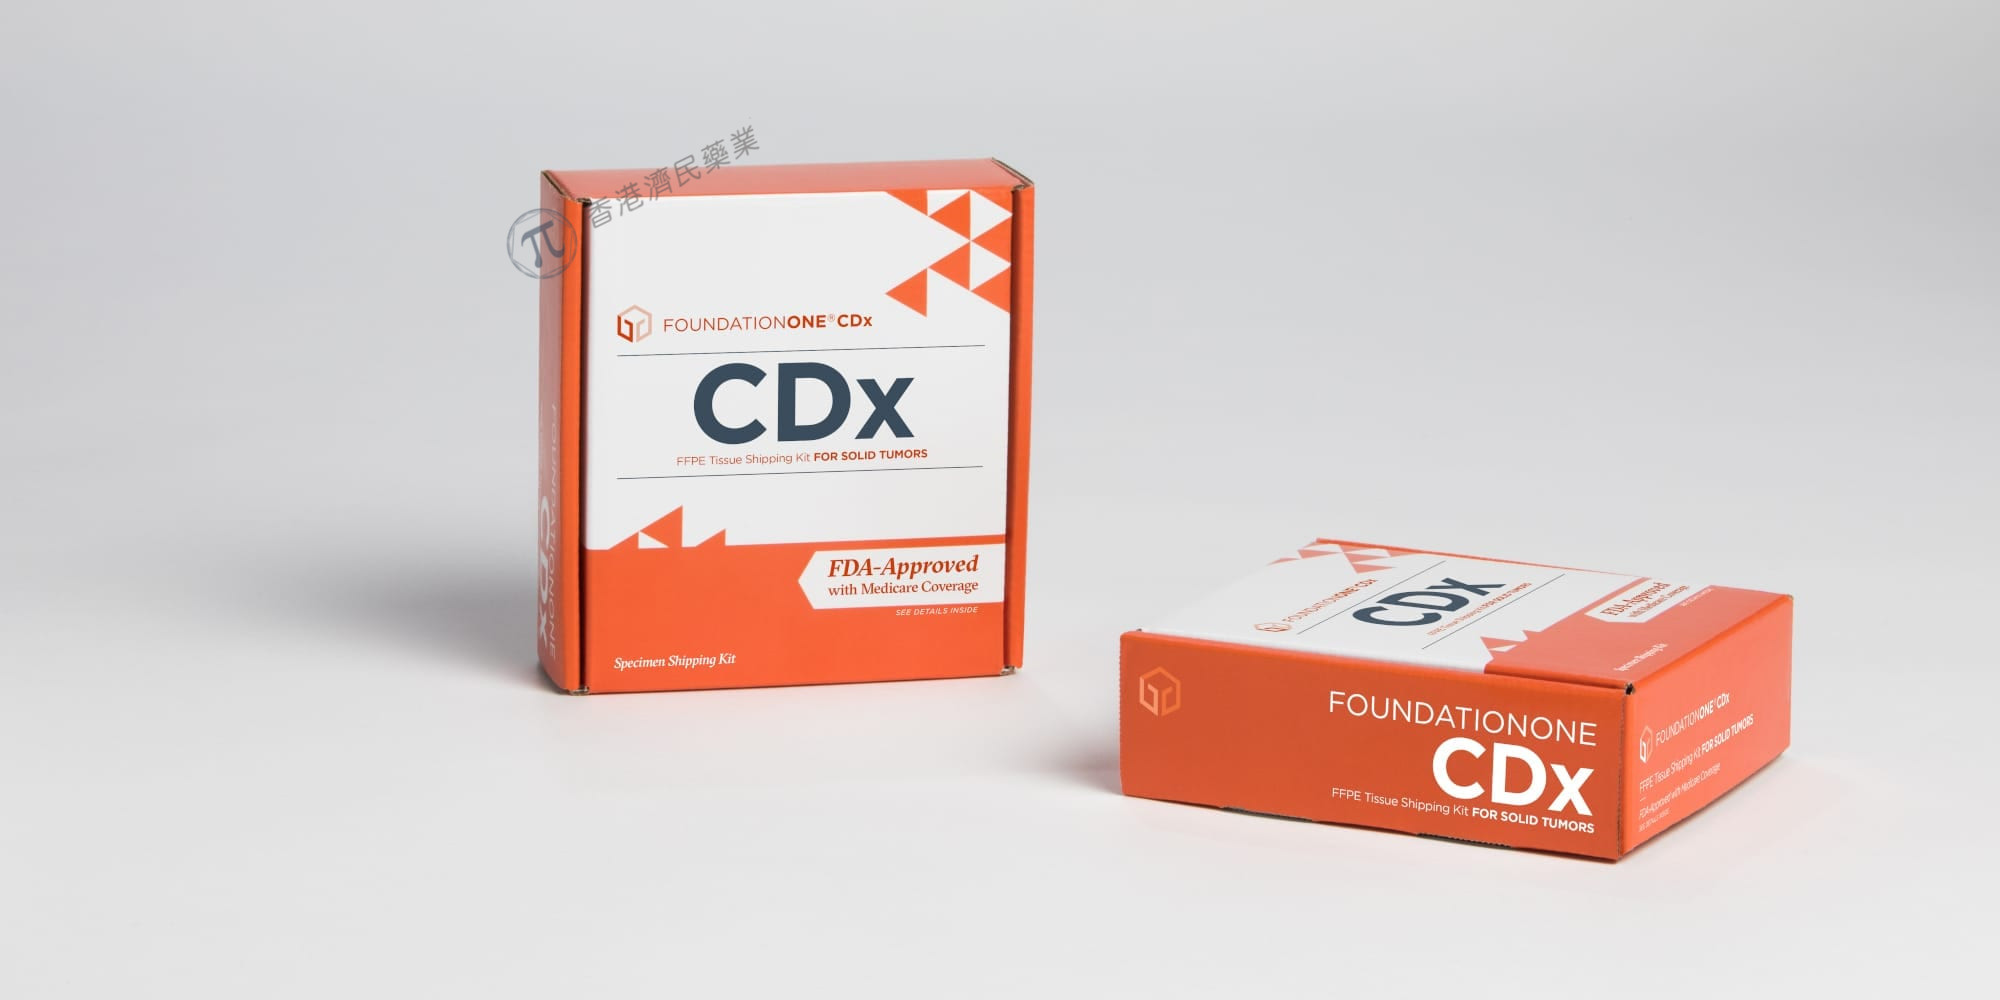 FoundationOne CDx：一种塞普替尼的辅助诊断，用于识别RET+实体瘤_香港济民药业